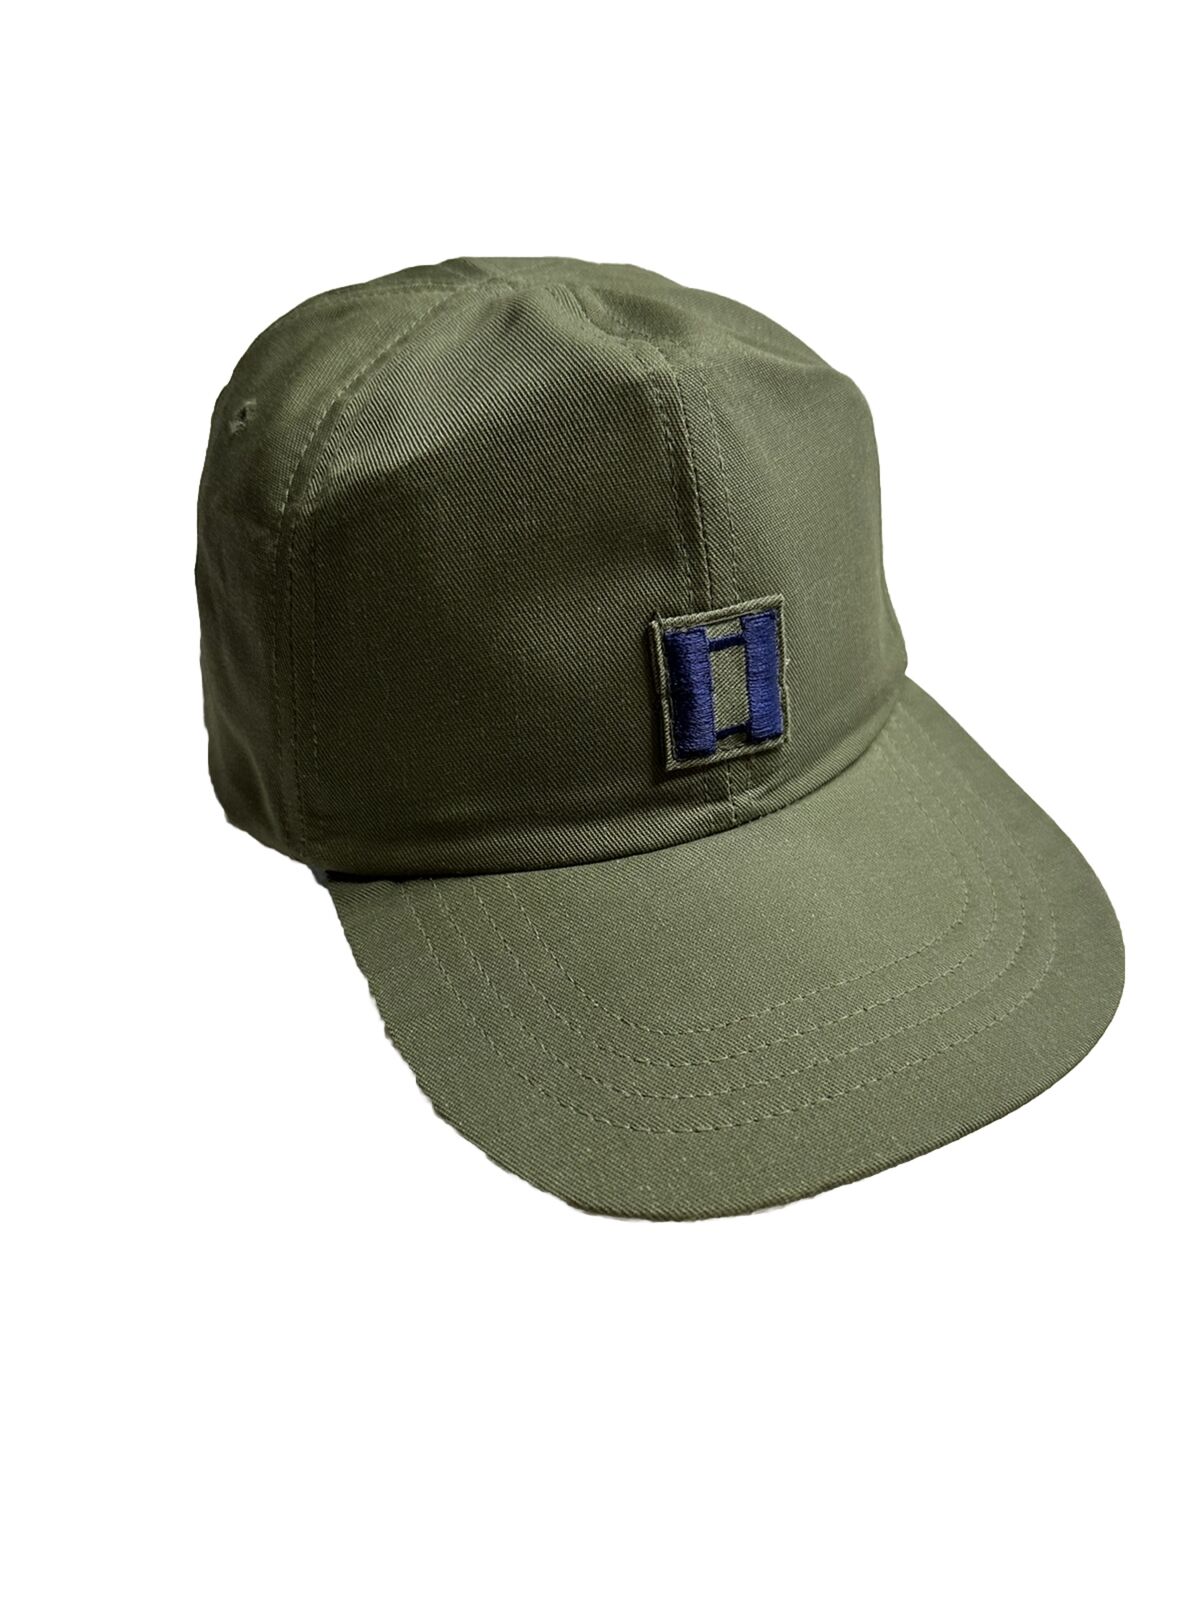 VINTAGE 1980s 7 1/8 CAP HOT WEATHER OG-507 US ARMY MILITARY UNIFORM HAT